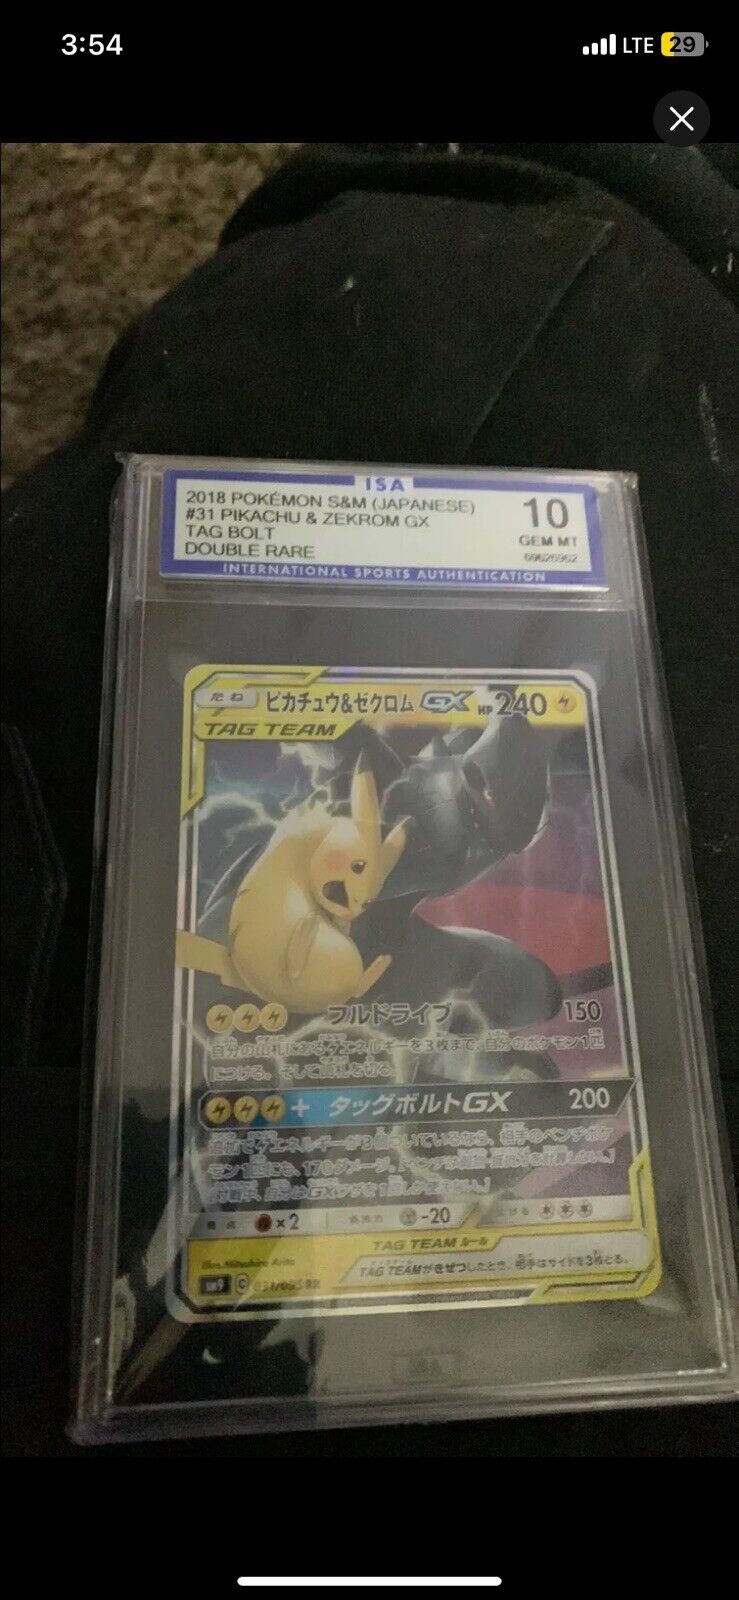 Pikachu & Zekrom GX 041 Tag Team GX All Stars Japanese PSA 9 Pokemon Card B50